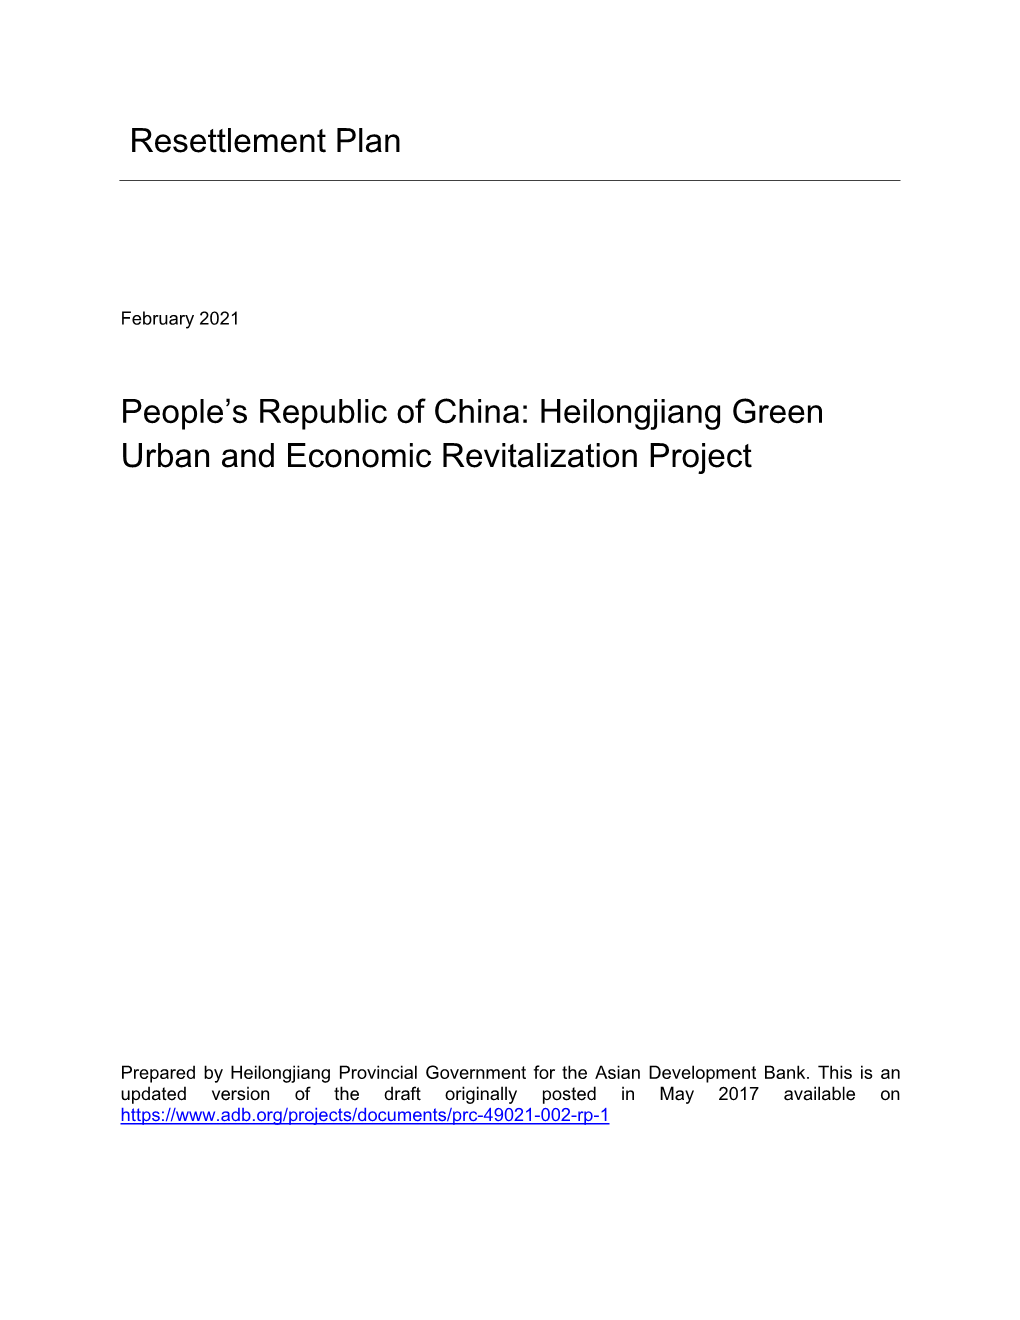 49021-002: Heilongjiang Green Urban